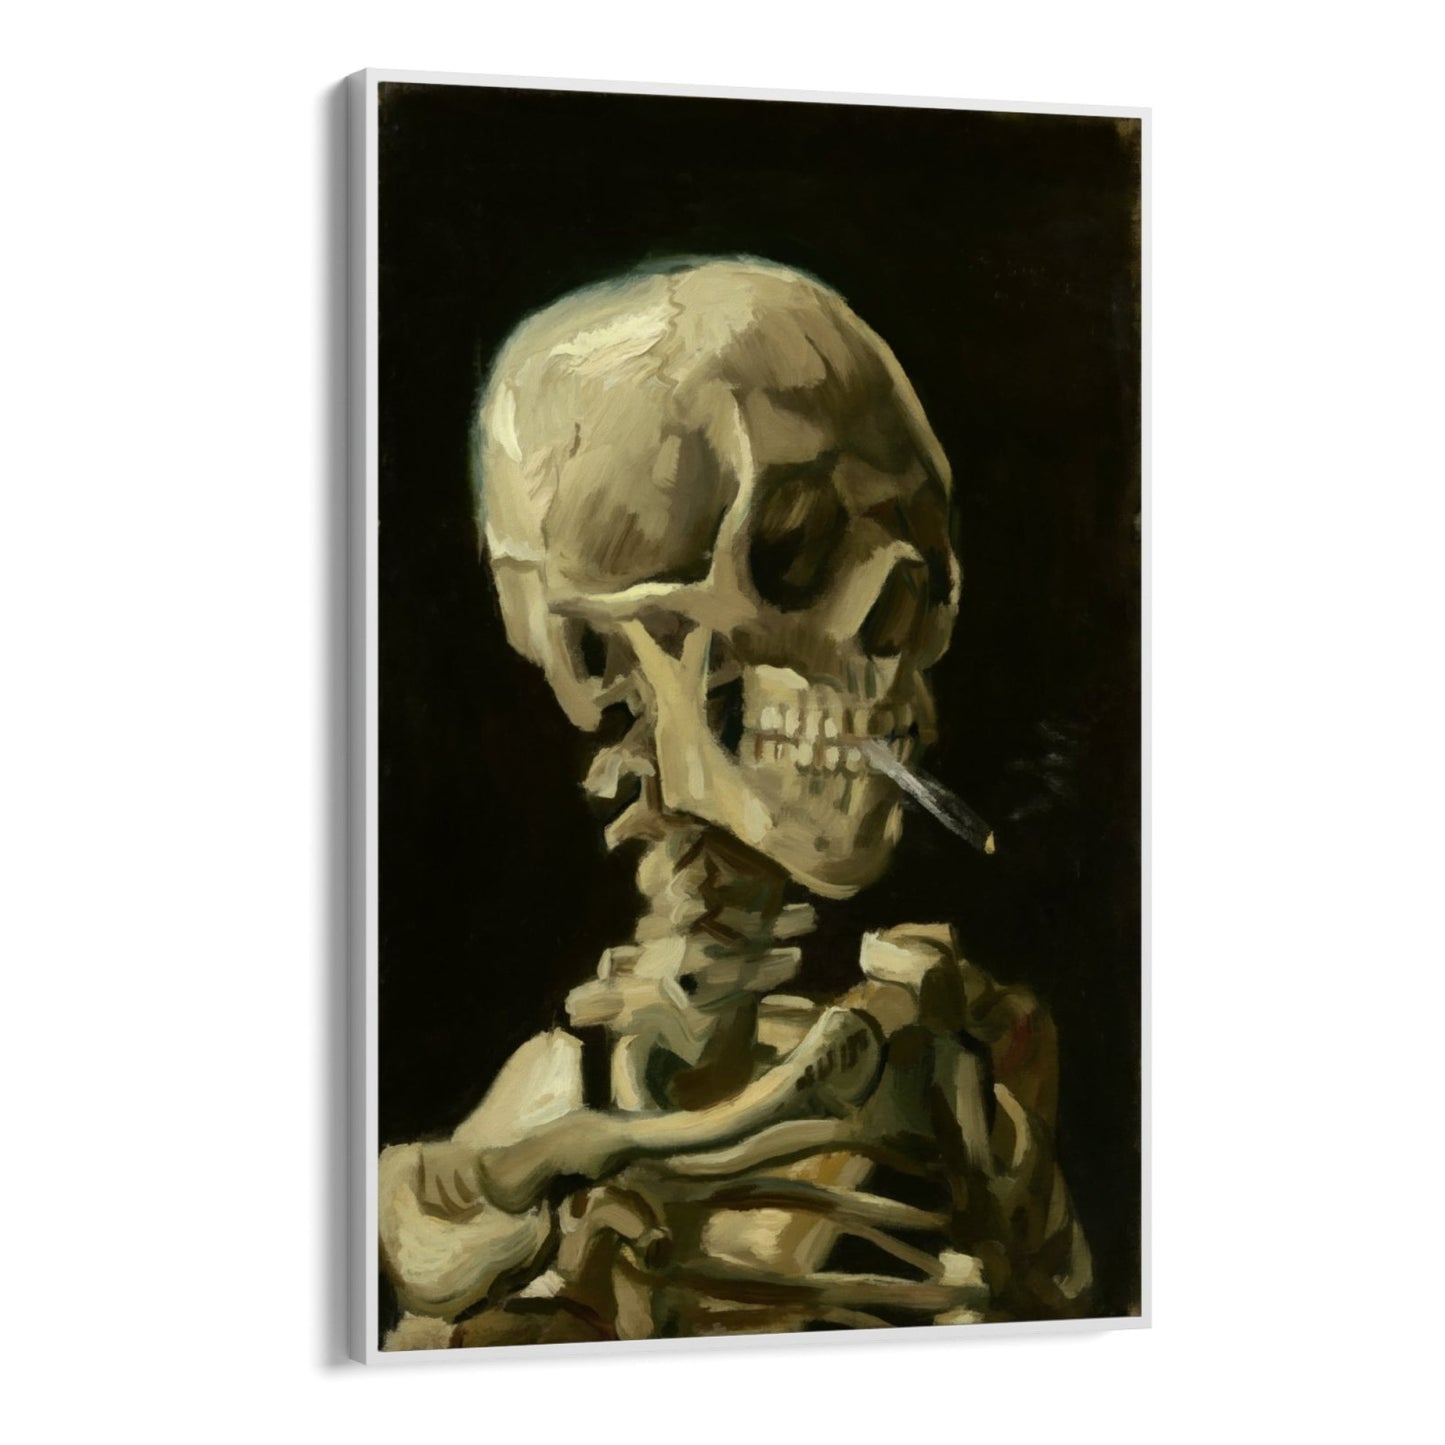 Kaukolė su cigarete, Vincentas Van Gogas